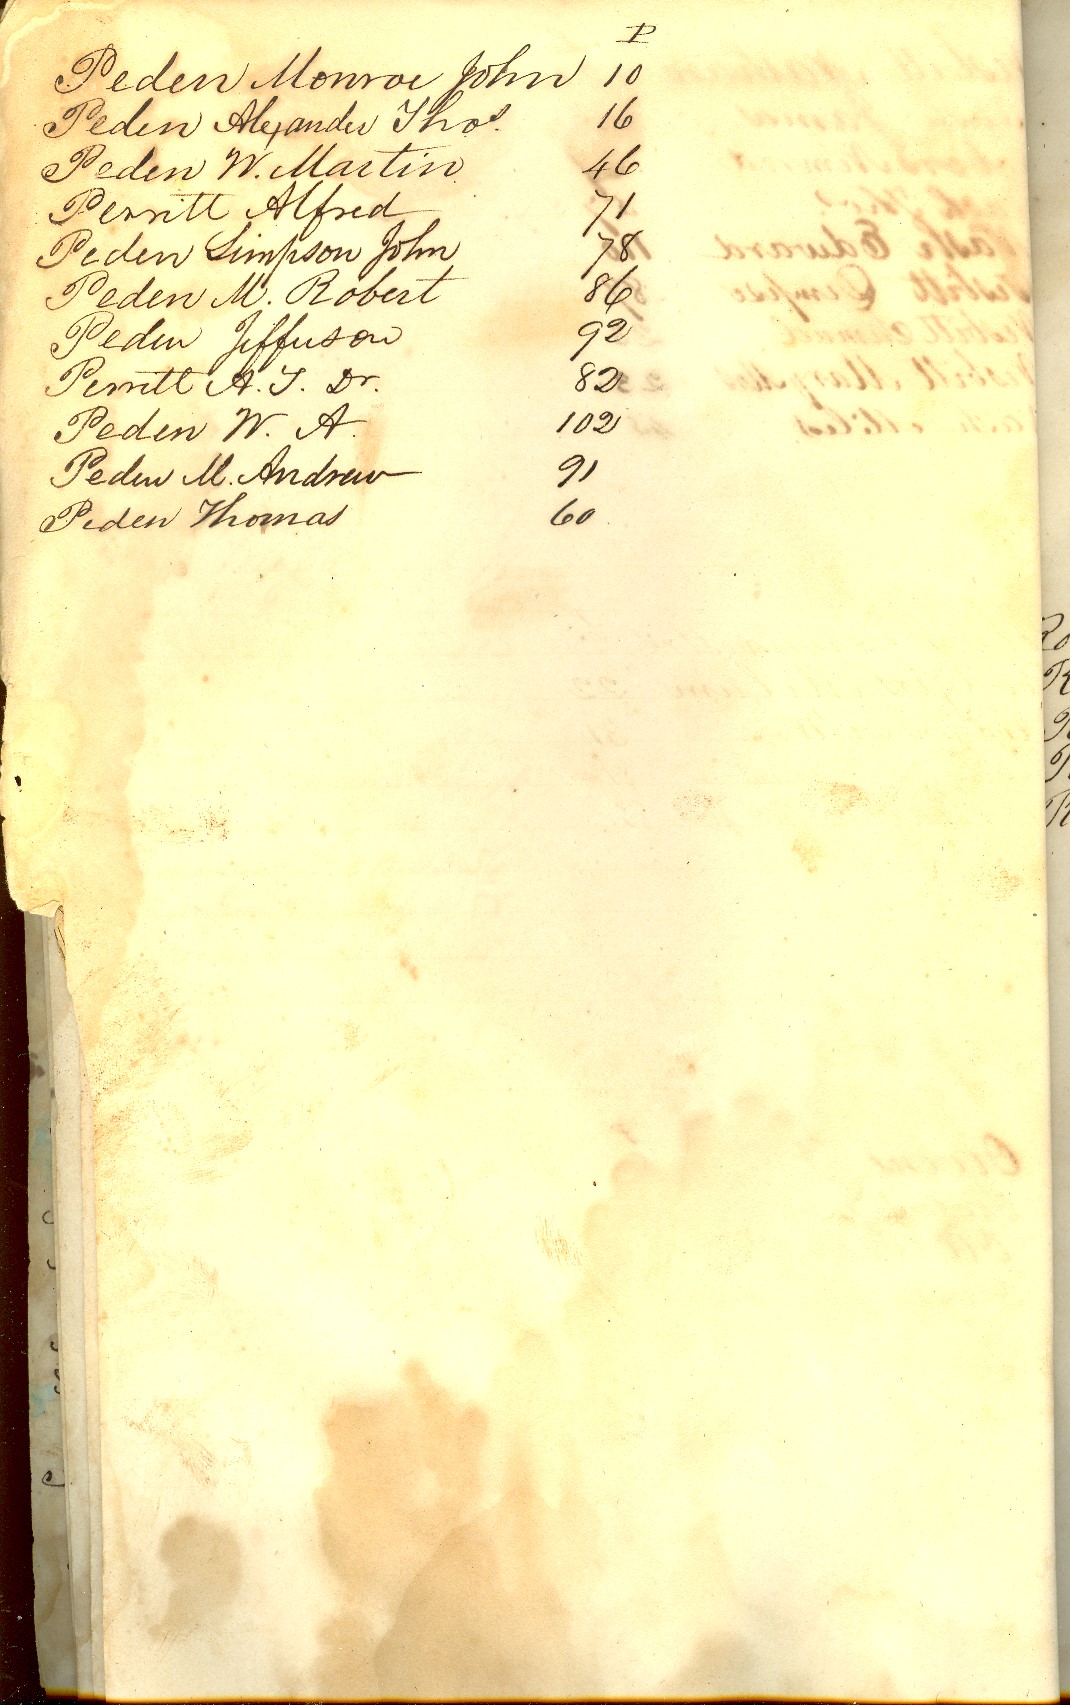 Bolling Store Ledger - 1844 Listing, p. 10